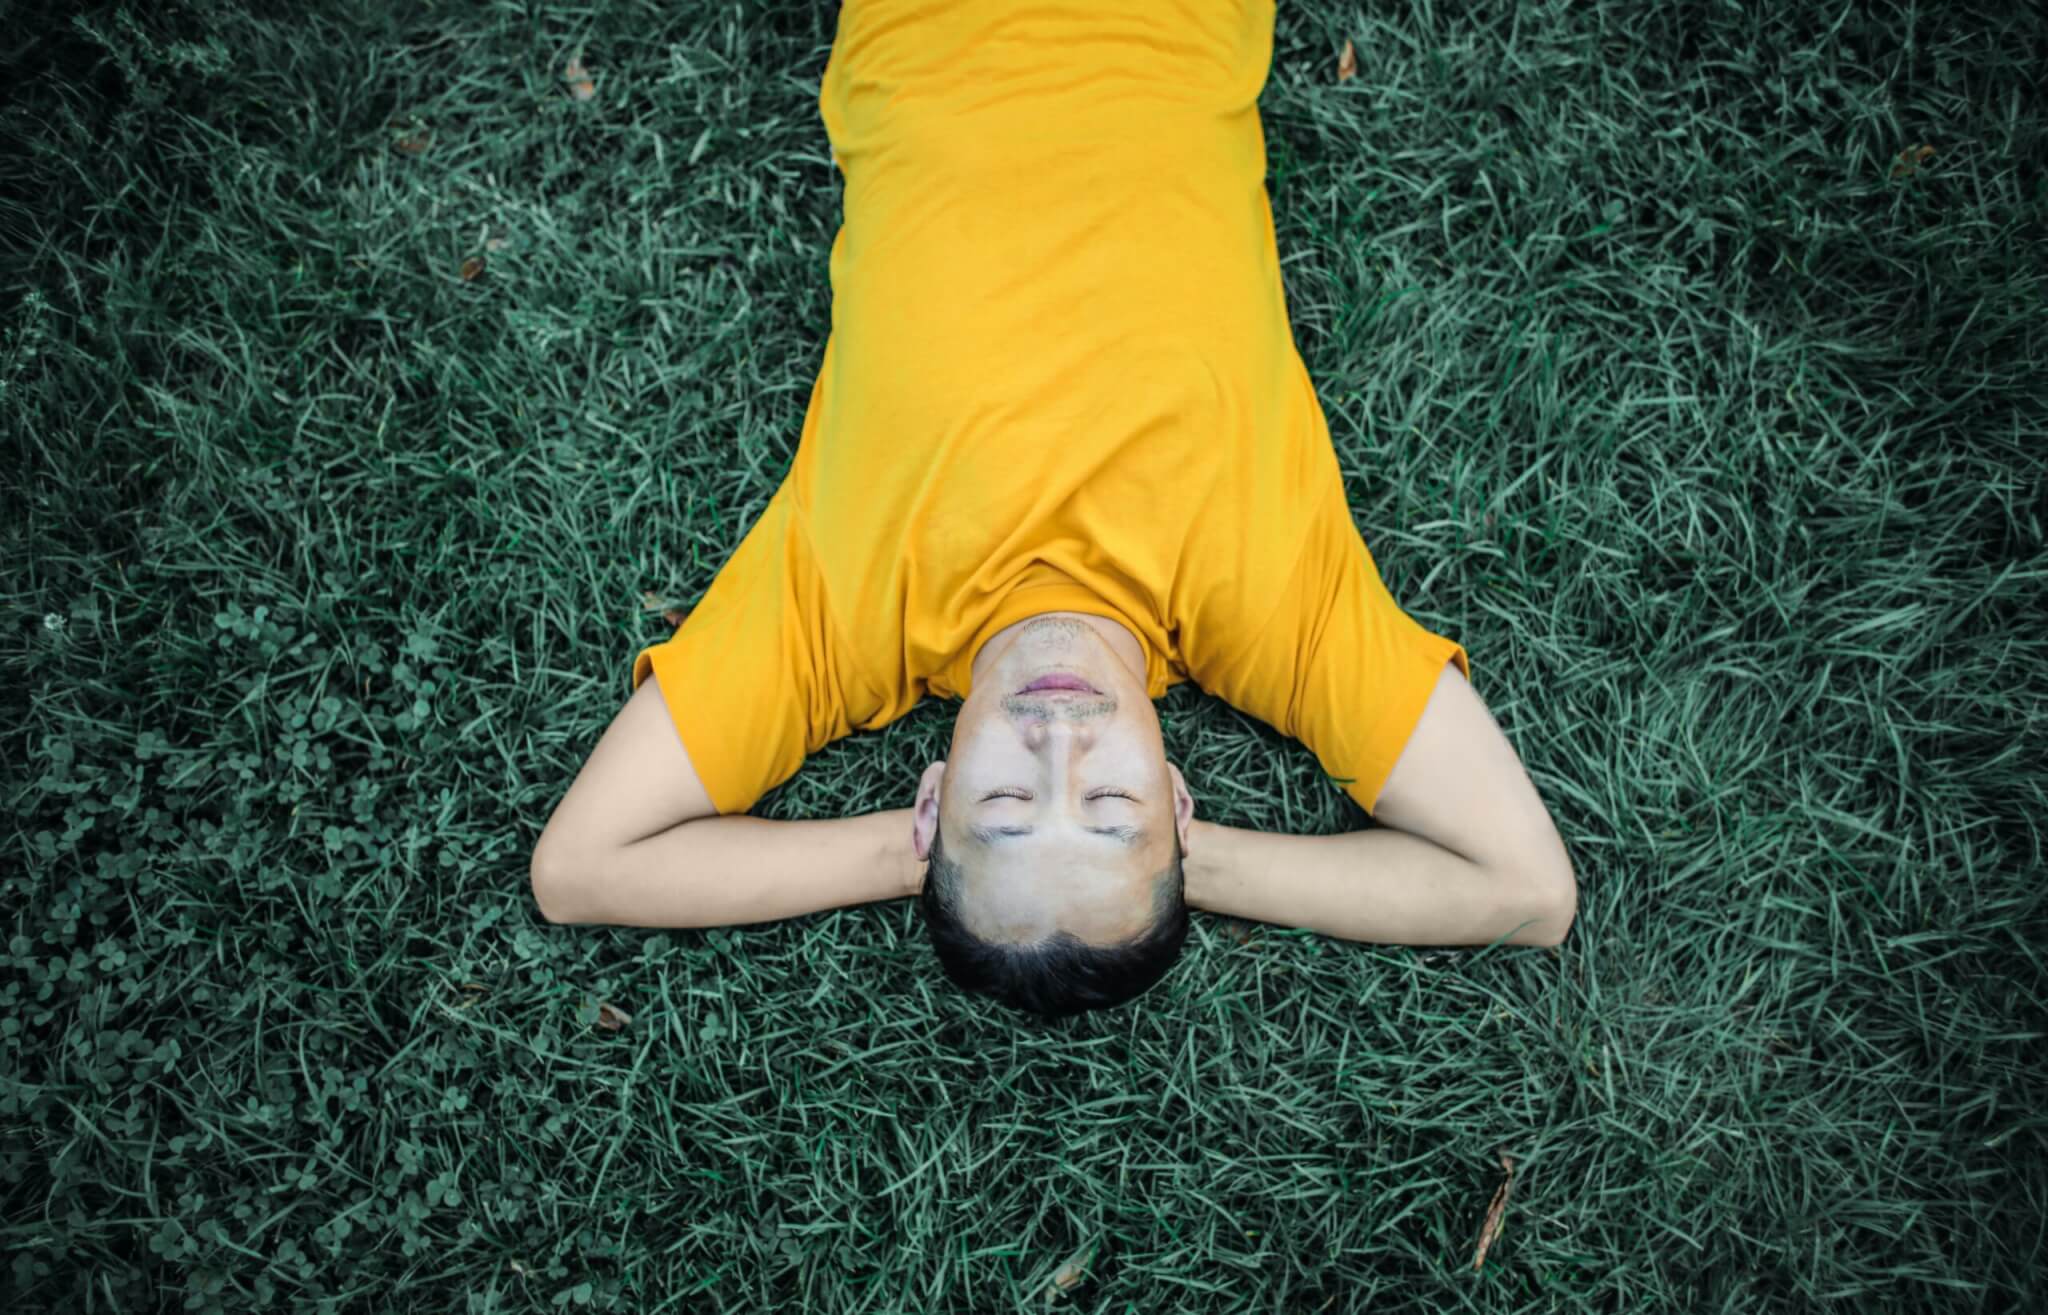 Man Wearing Yellow Lying Down on Grass